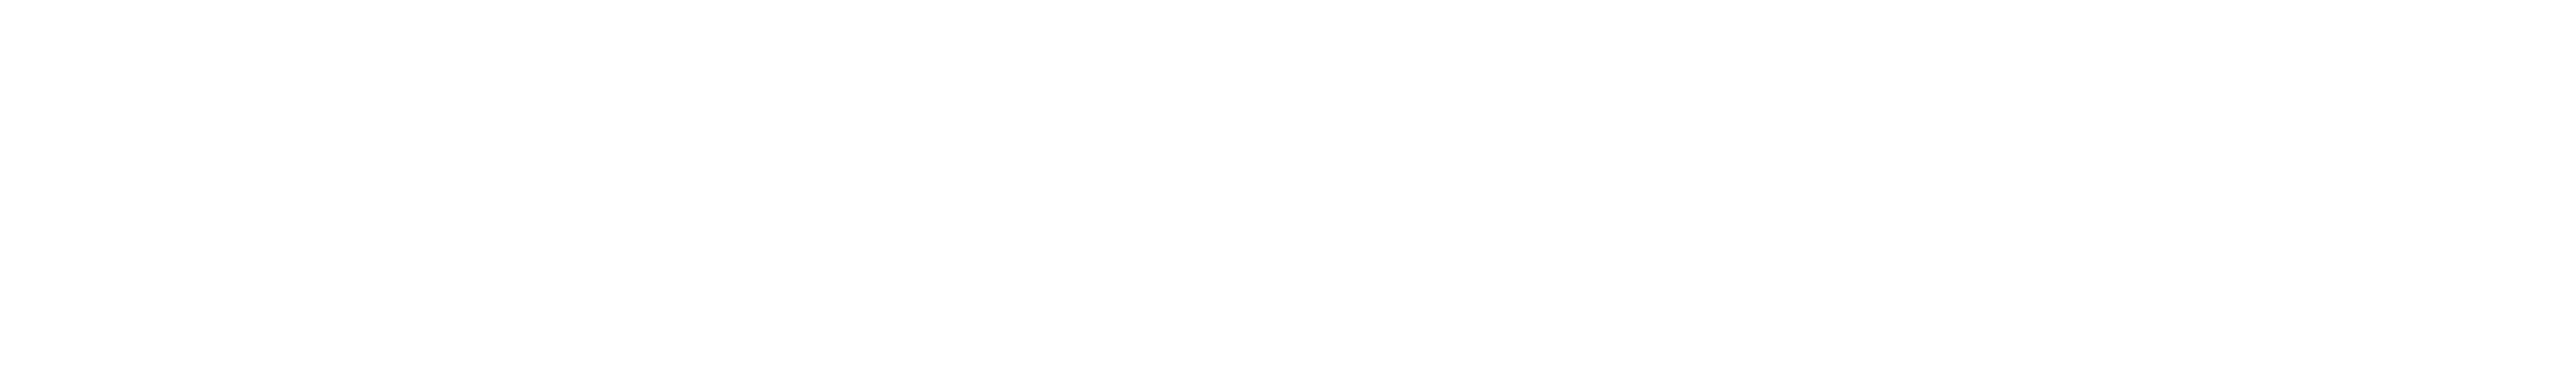 CK group logo